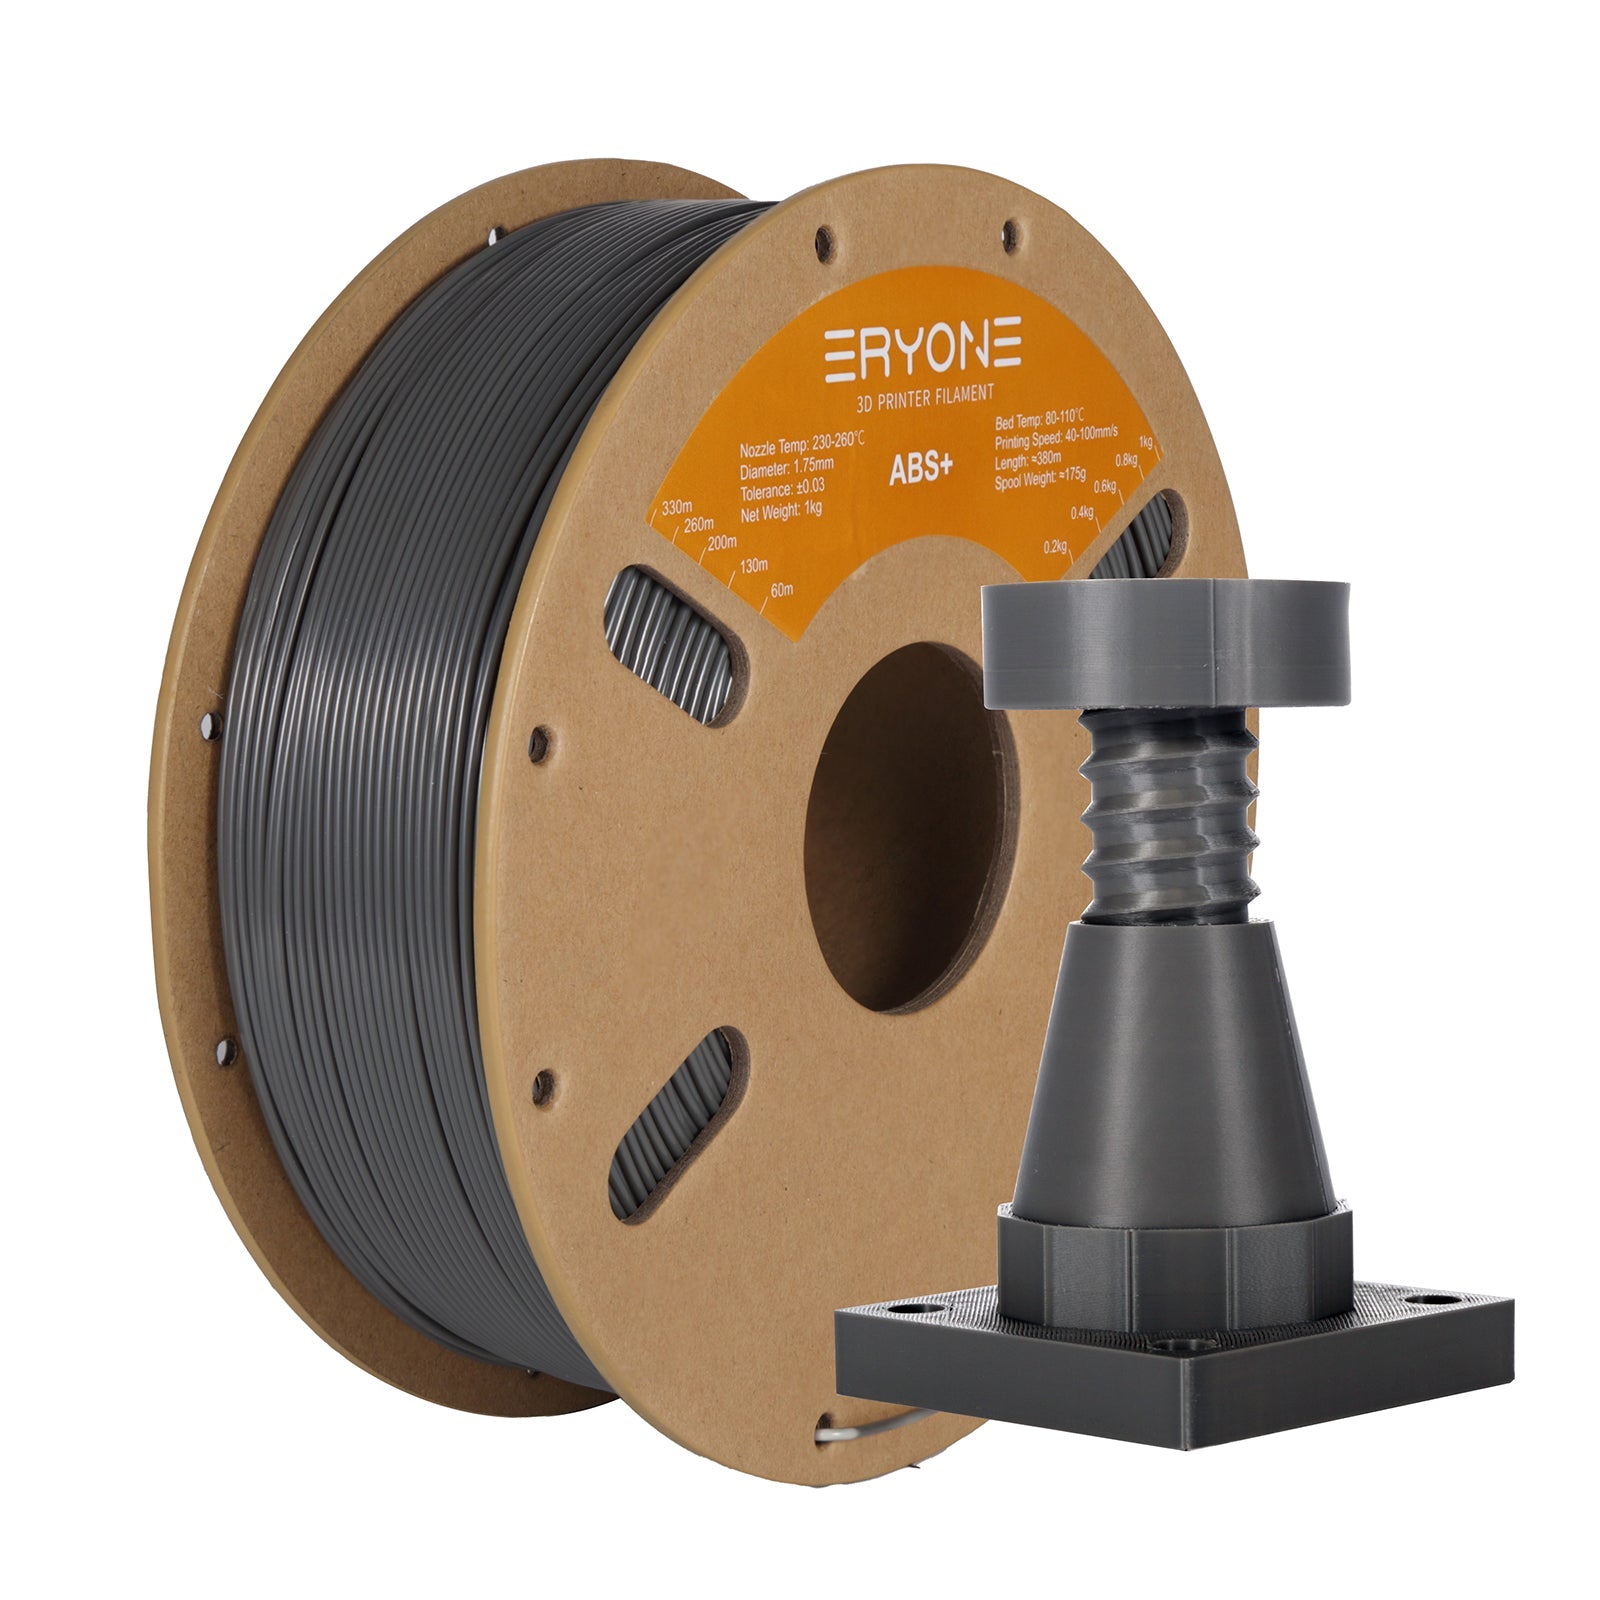 ERYONE ABS+ 3D Printer Filament 1.75mm, Dimensional Accuracy +/- 0.05 mm 1kg (2.2LBS)/Spool